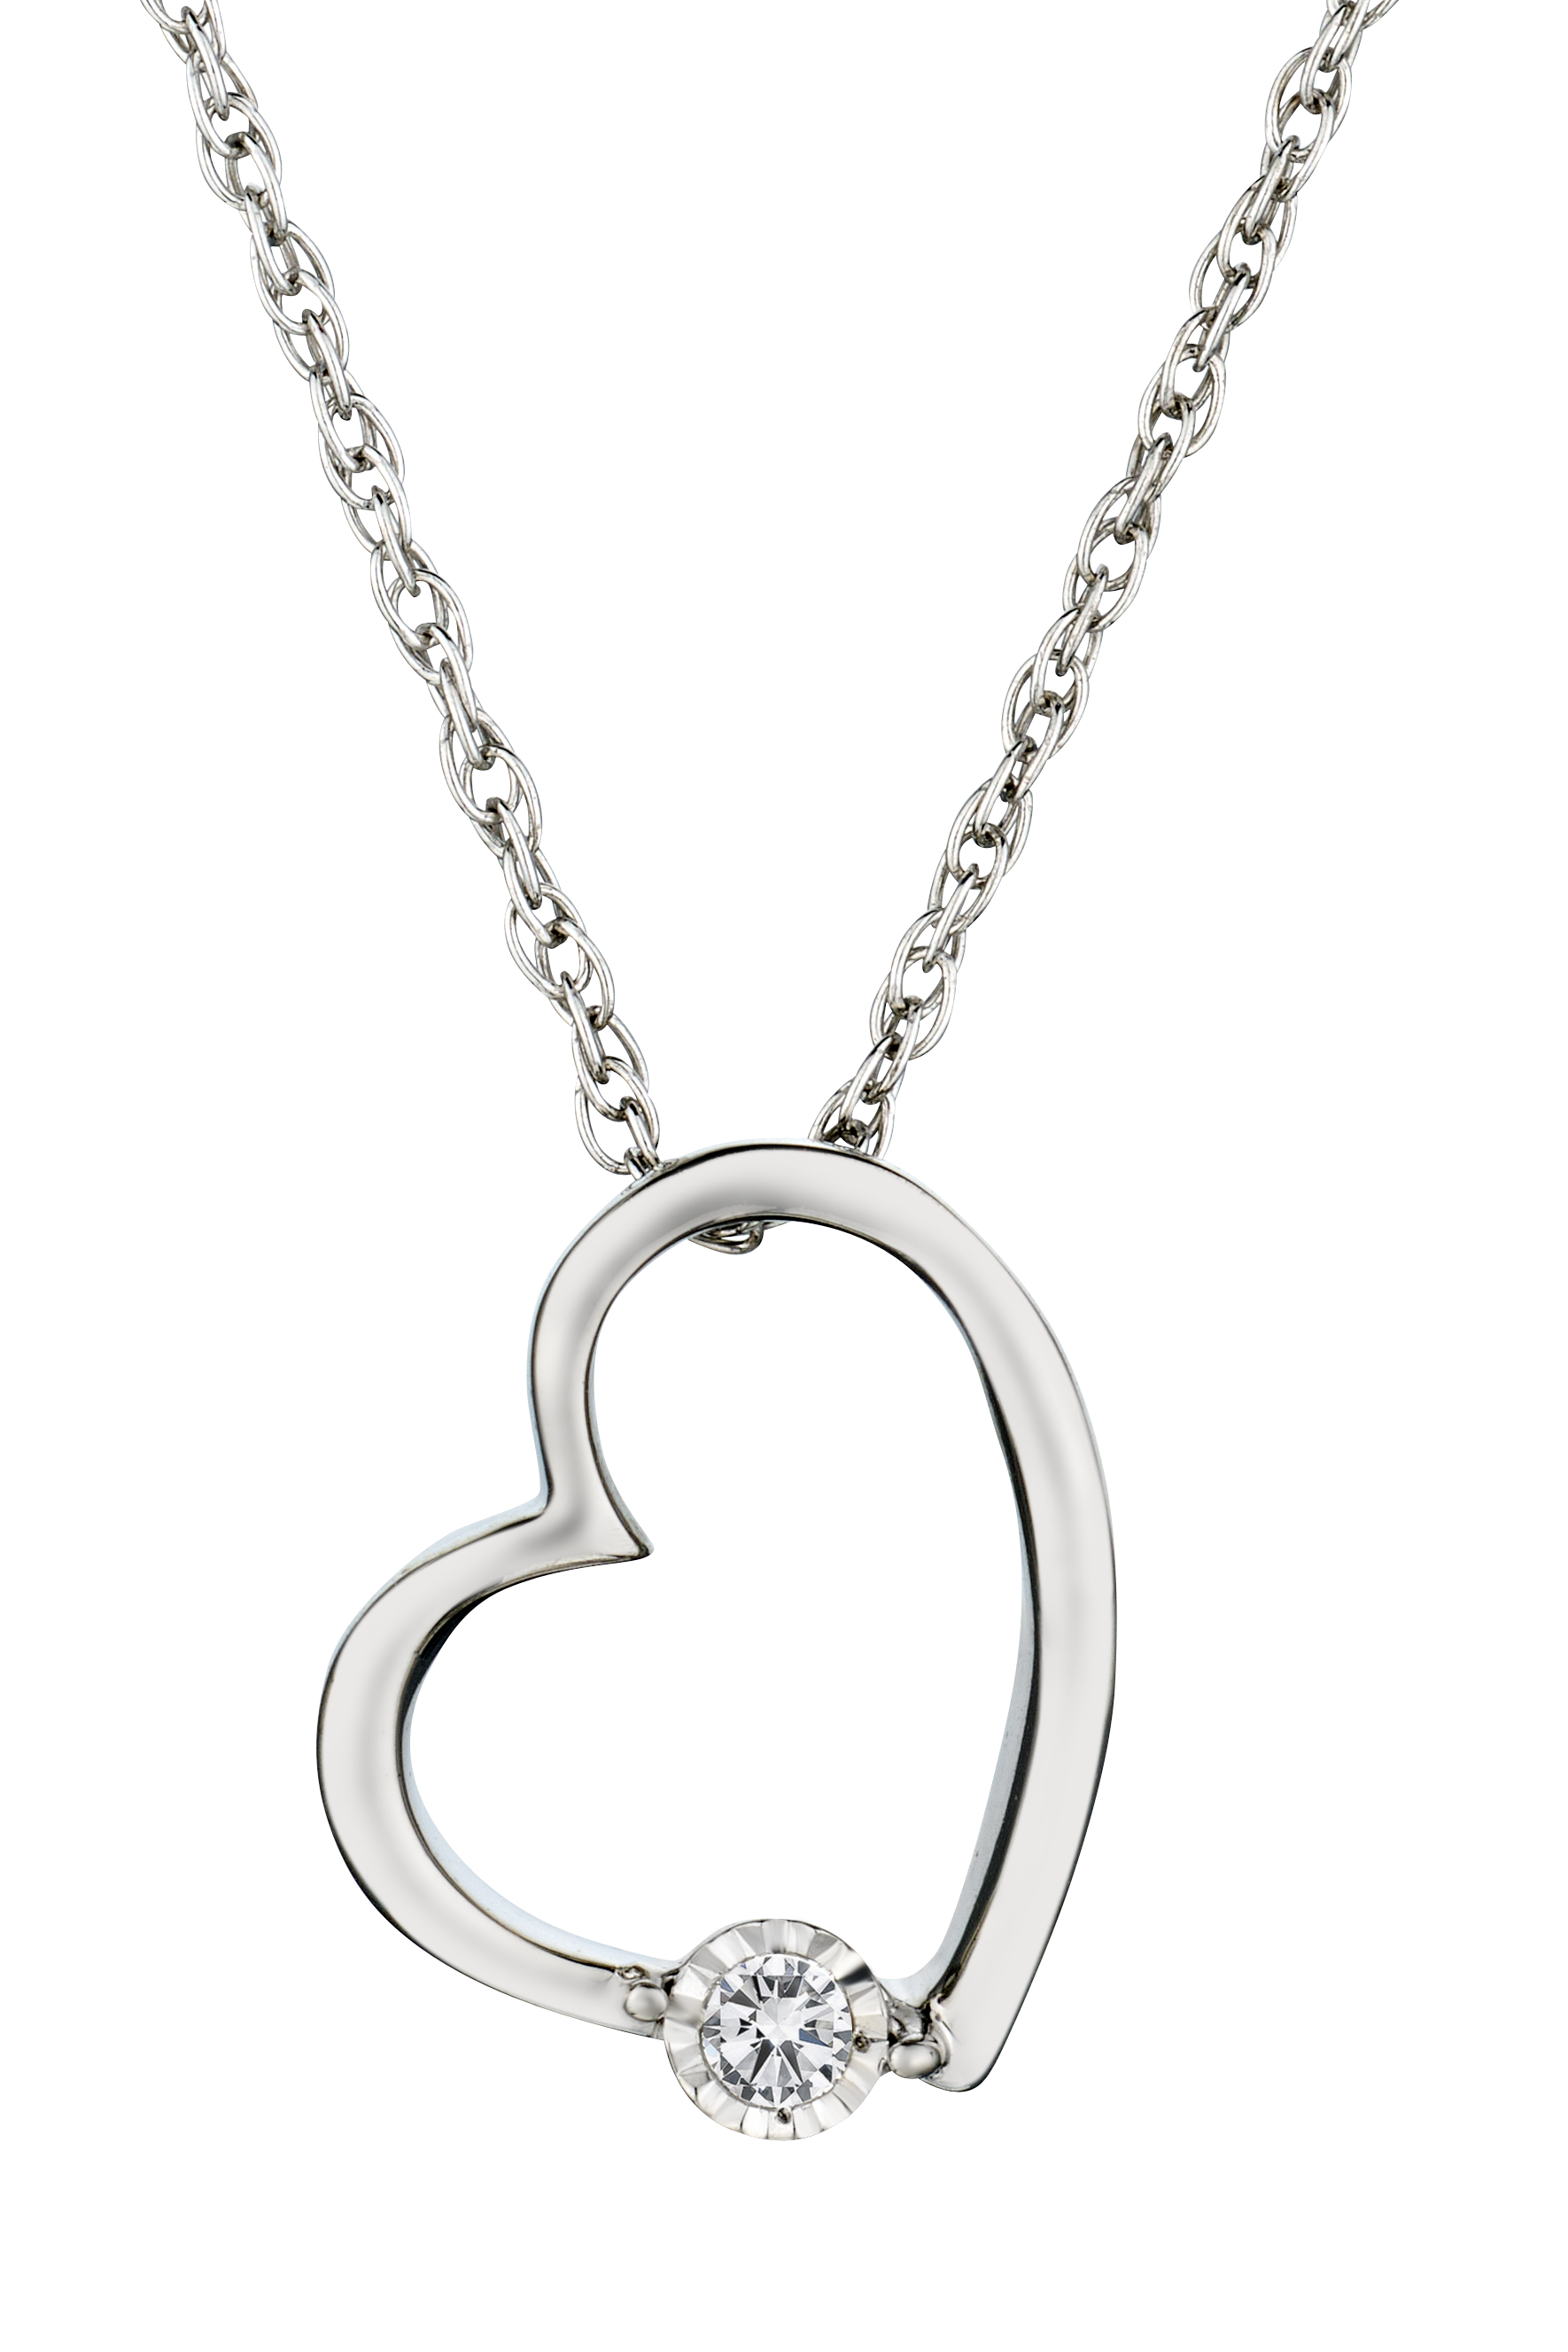 .04 Carat of Lab Grown Diamond "Heart" Pendant, Silver.....................NOW